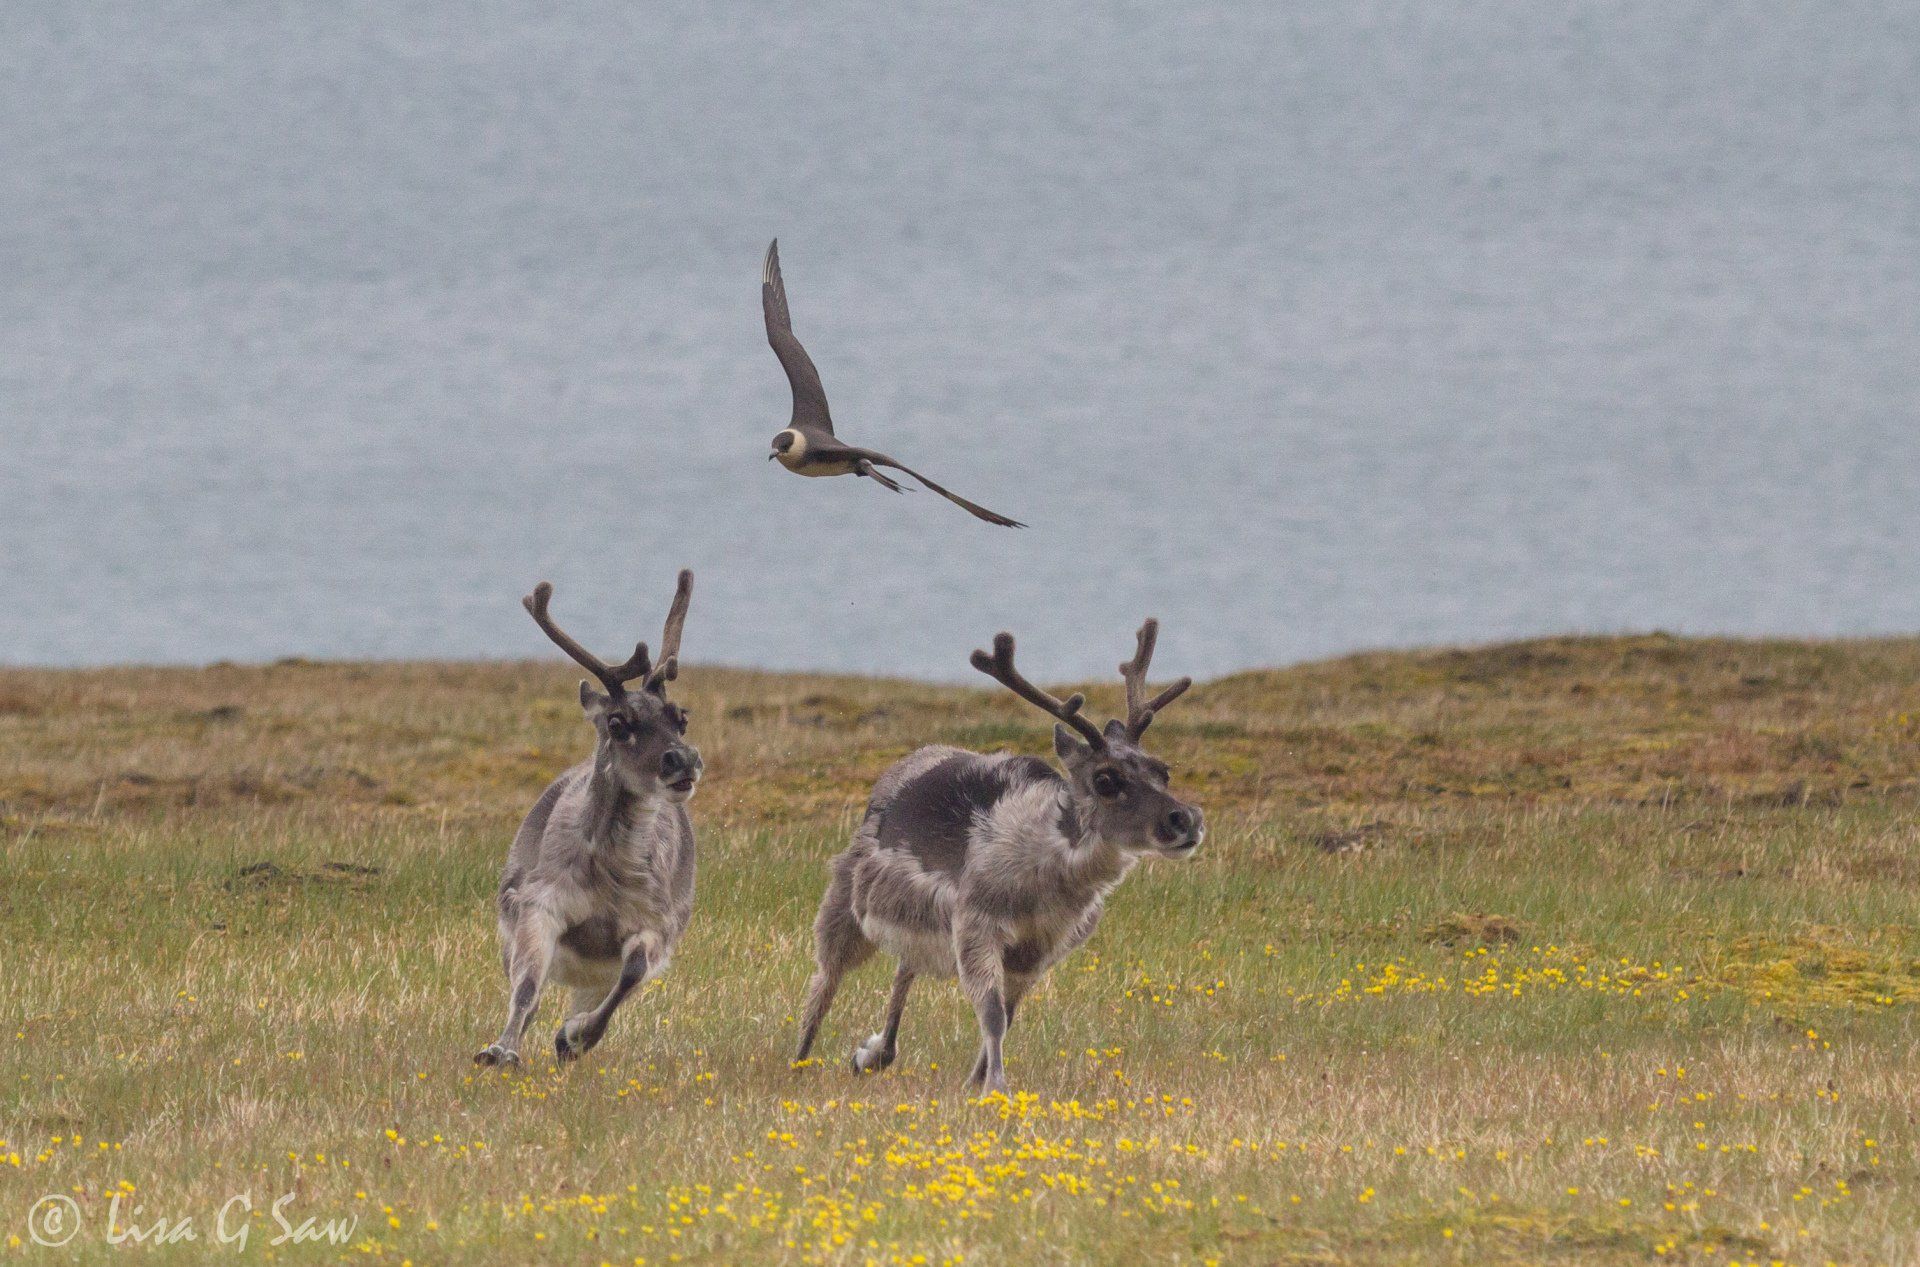 Arctic Skua scaring off two adult Reindeer on Svalbard